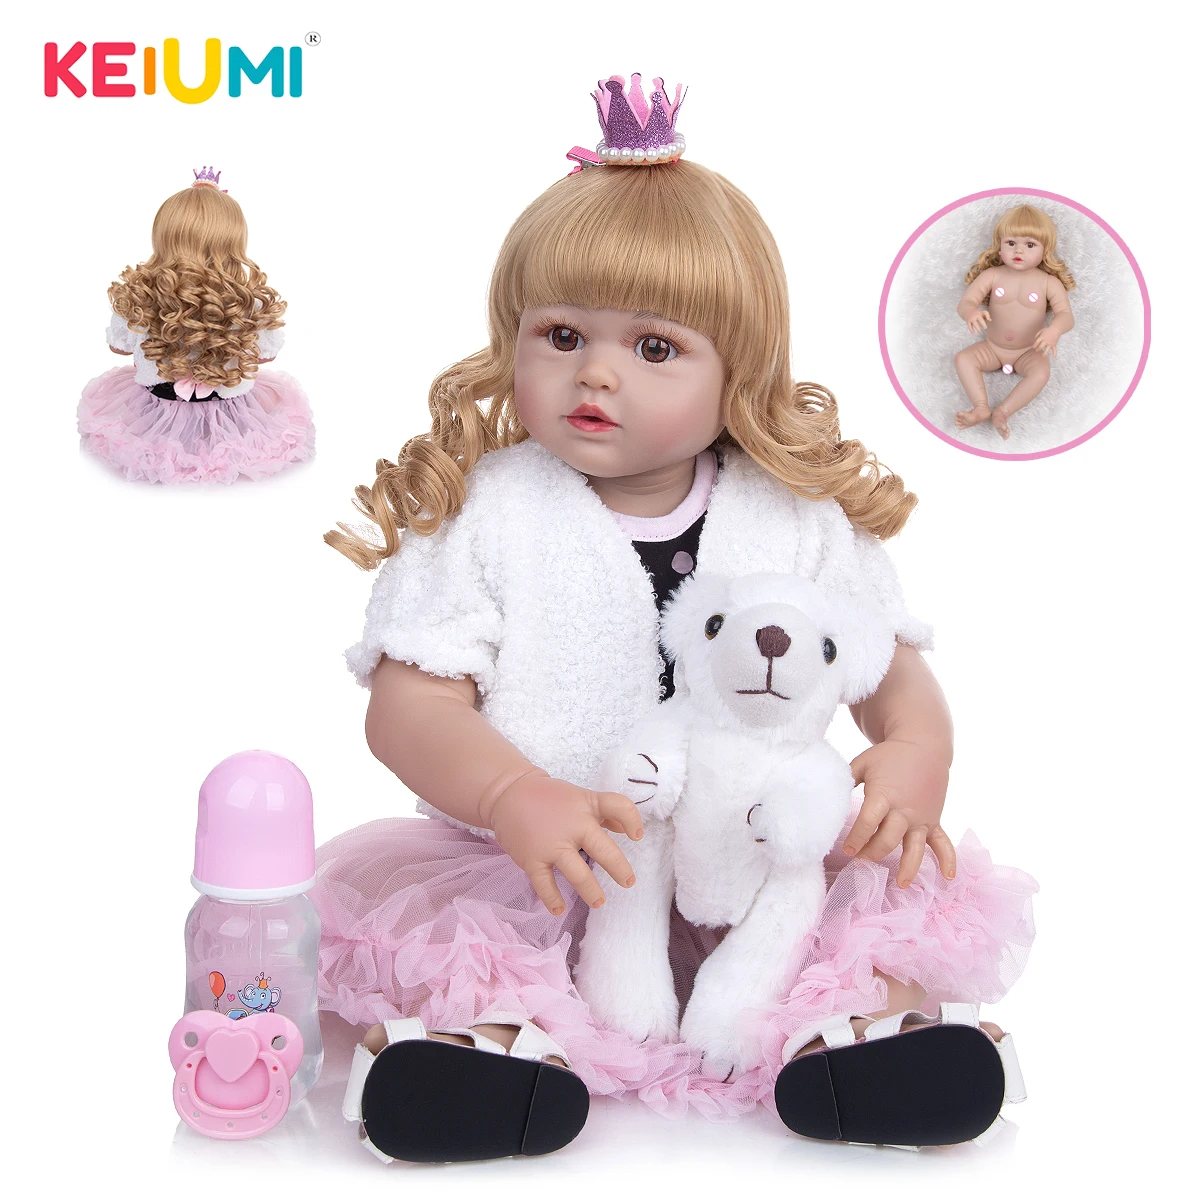 KEIUMI Reborn Dolls Full Vinyl Body 57cm Lifelike Fashion Princess Baby Doll Boneca Reborn Toy For Children's Day Gift 1